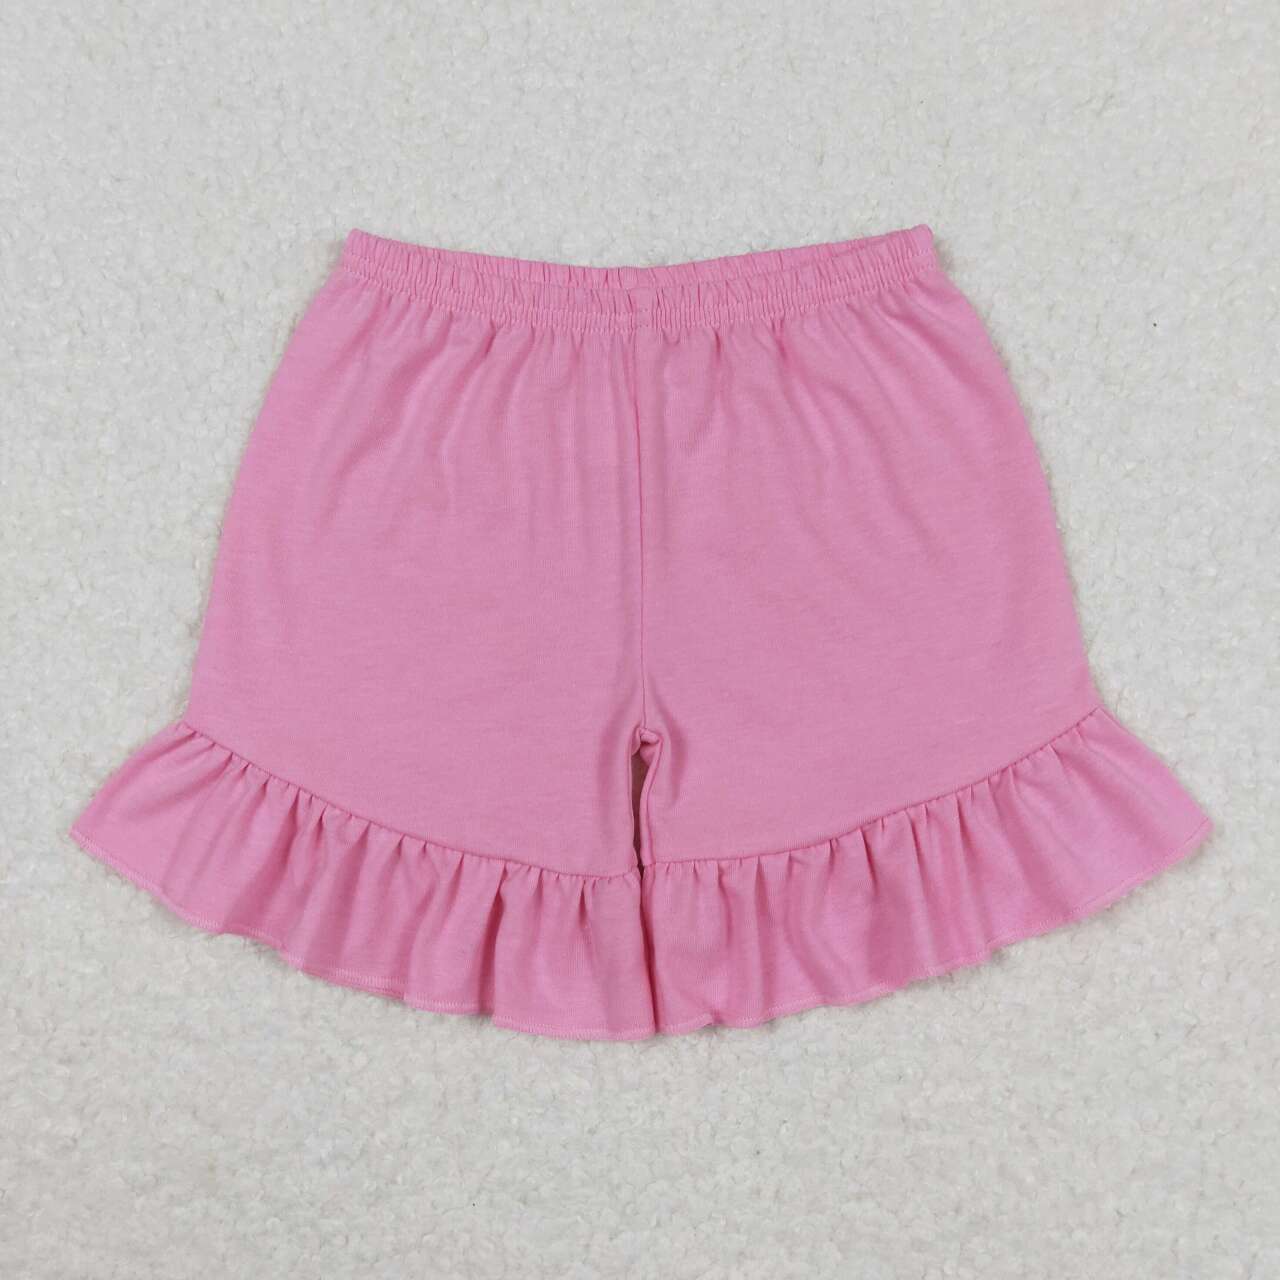 pink ruffle girl summer shorts